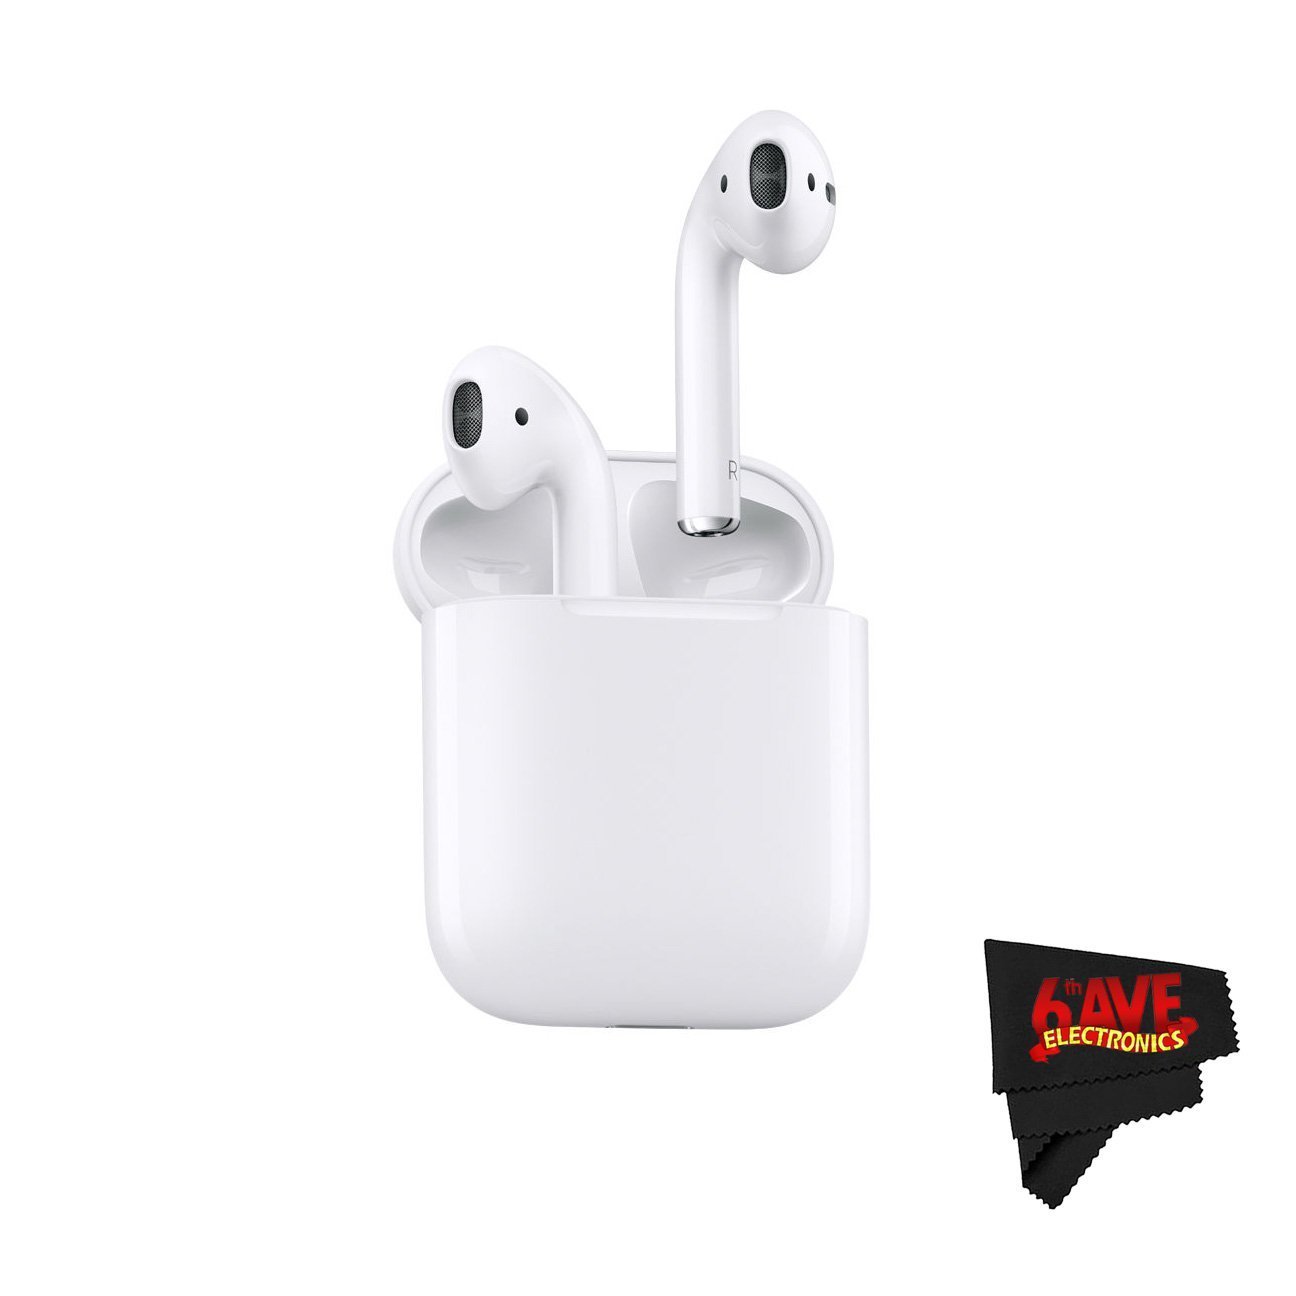 6Ave Apple AirPods Wireless Bluetooth Earphones